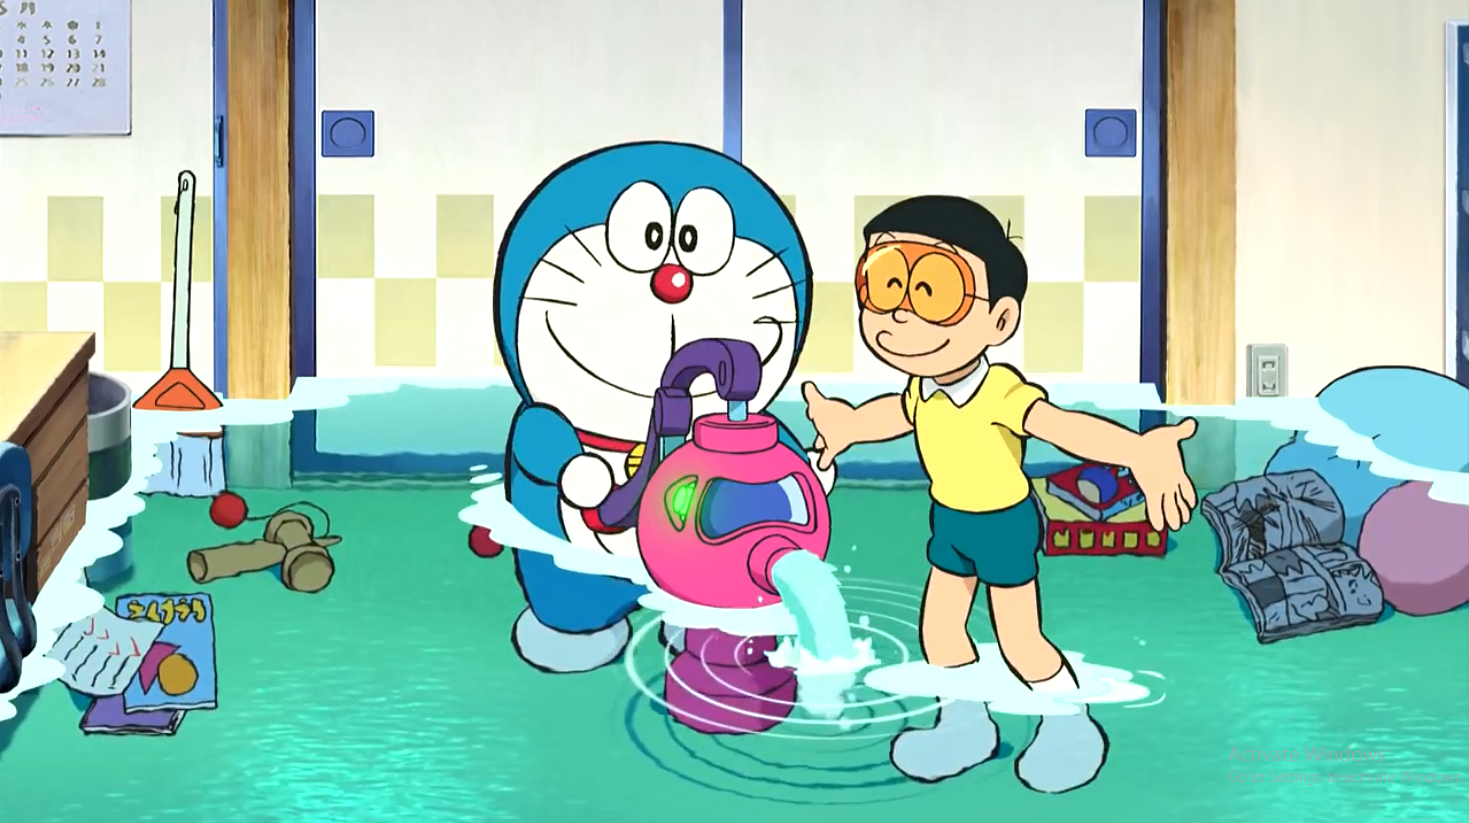 Cartoon Wonders Blog: Doraemon In Urdu & Hindi 22nd Movie - Doraemon